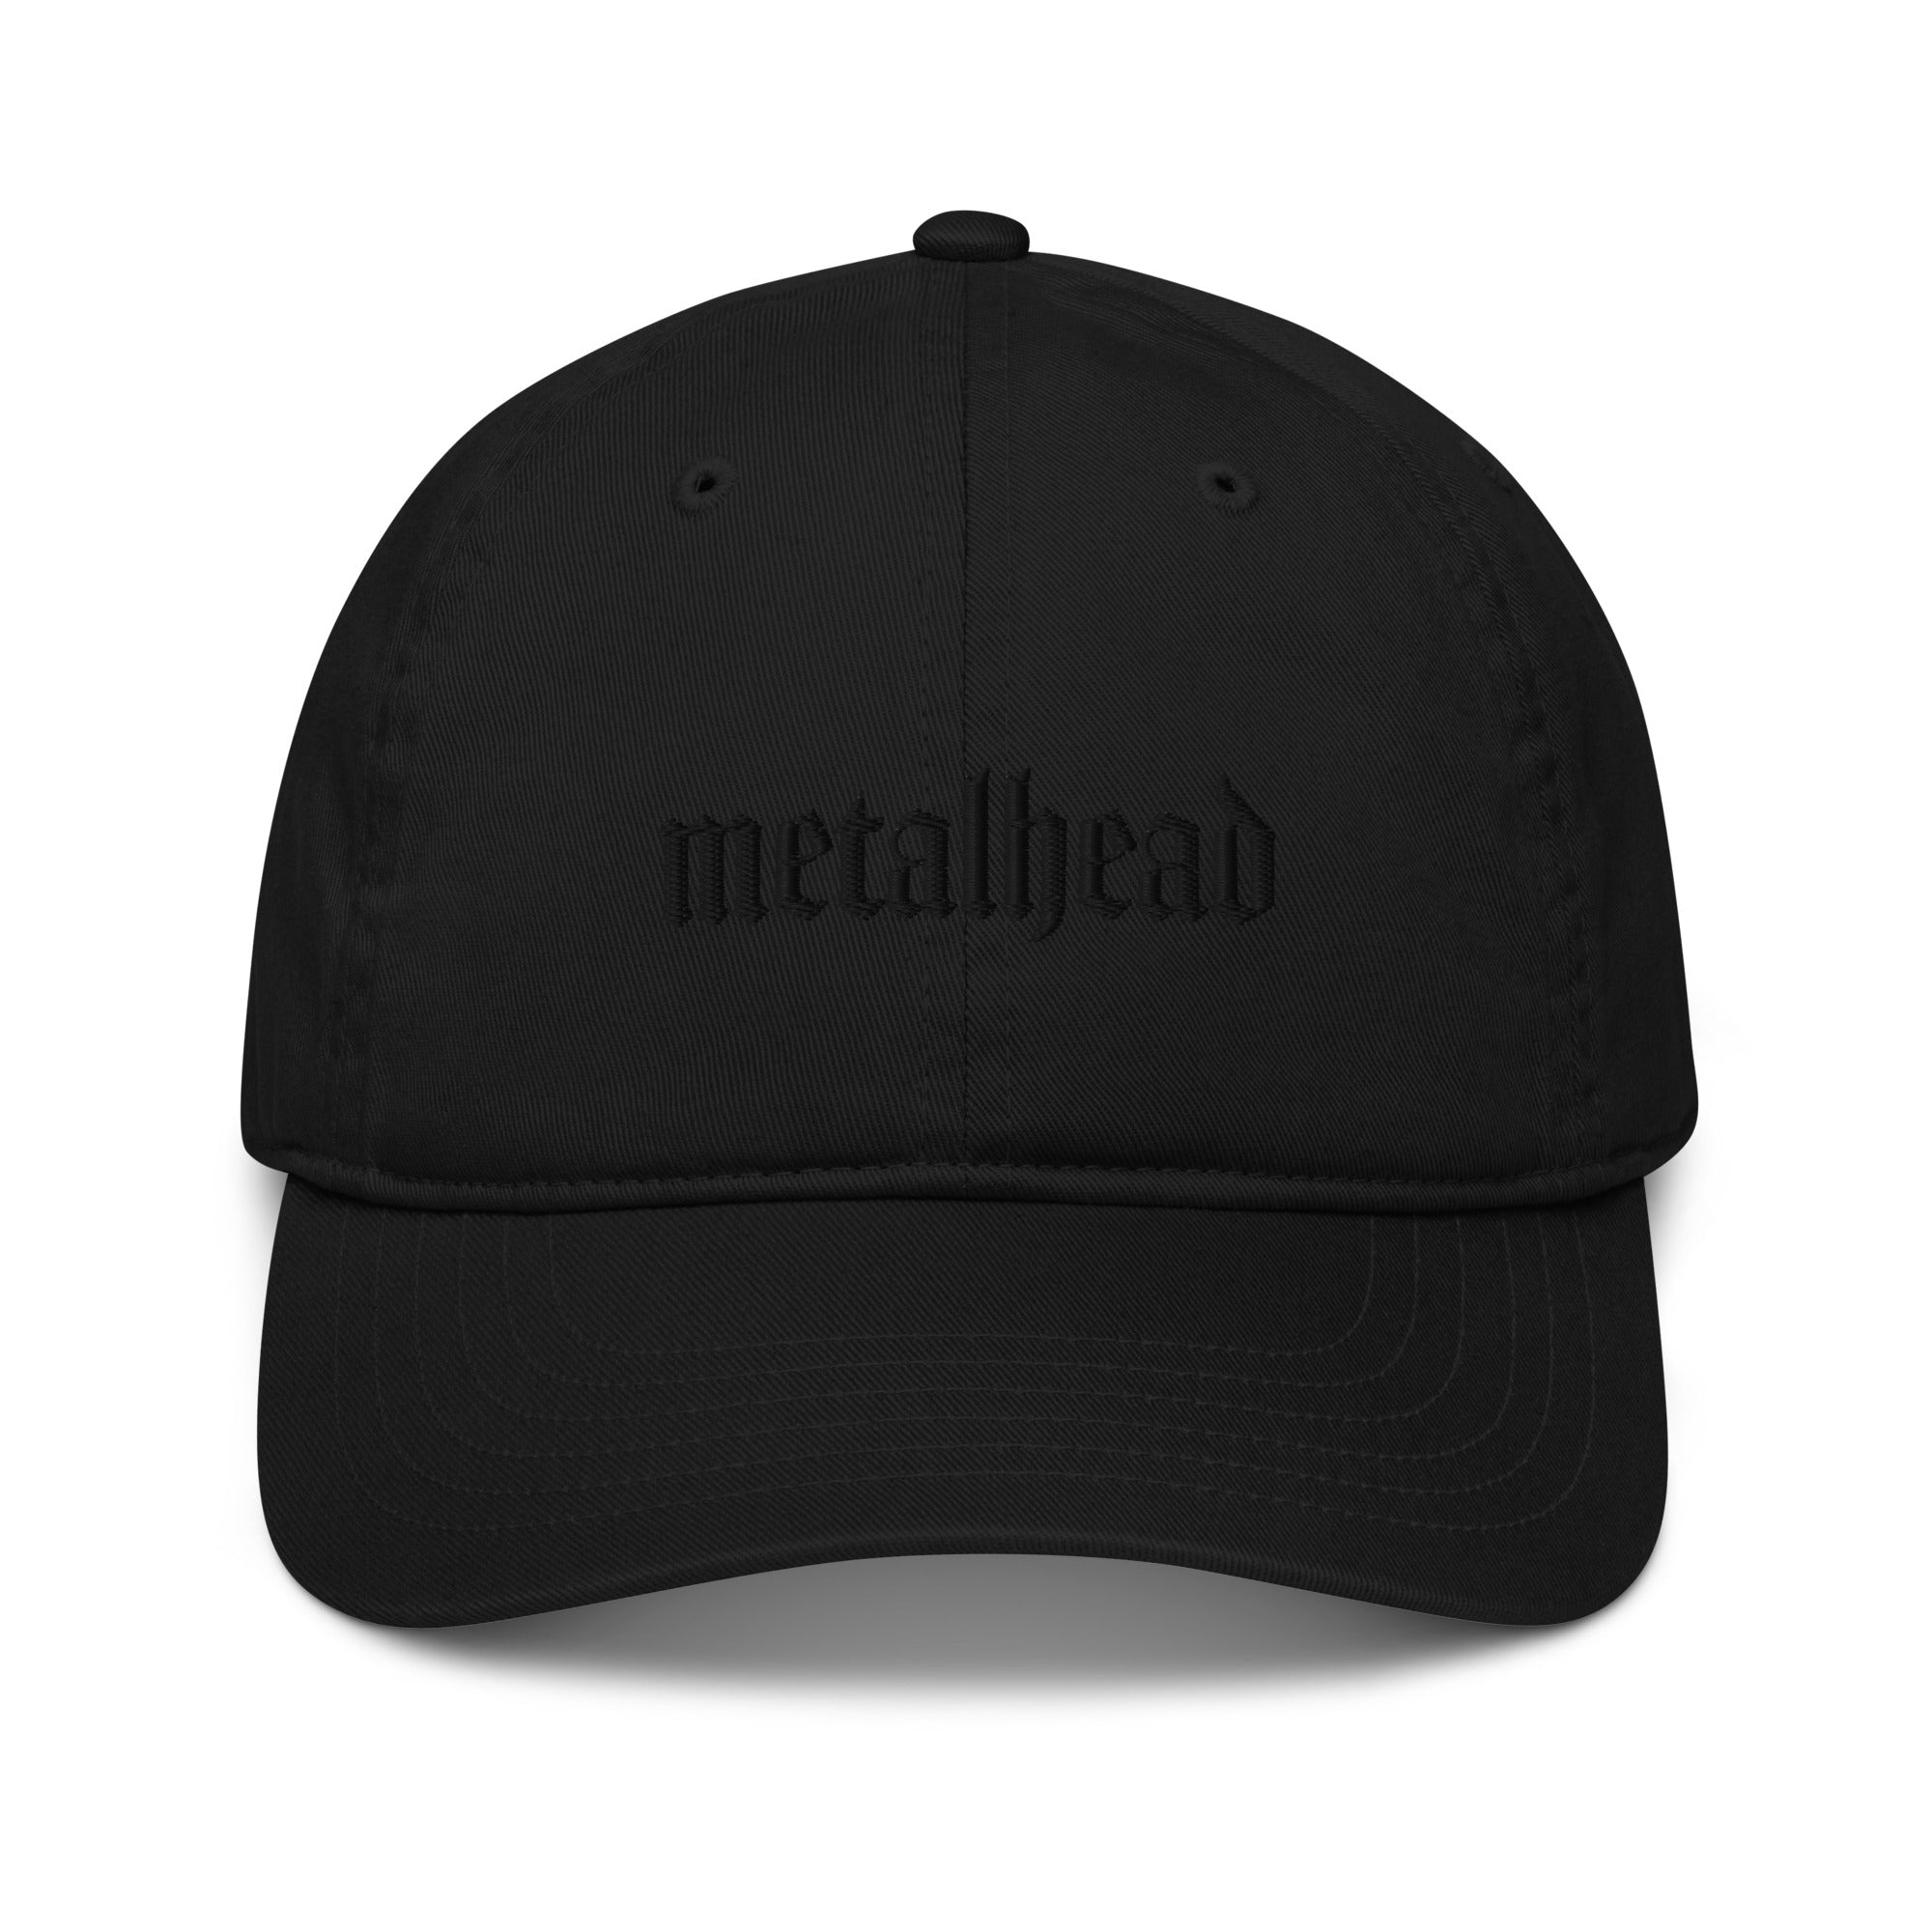 Embroidered Dad Hat | Metalhead